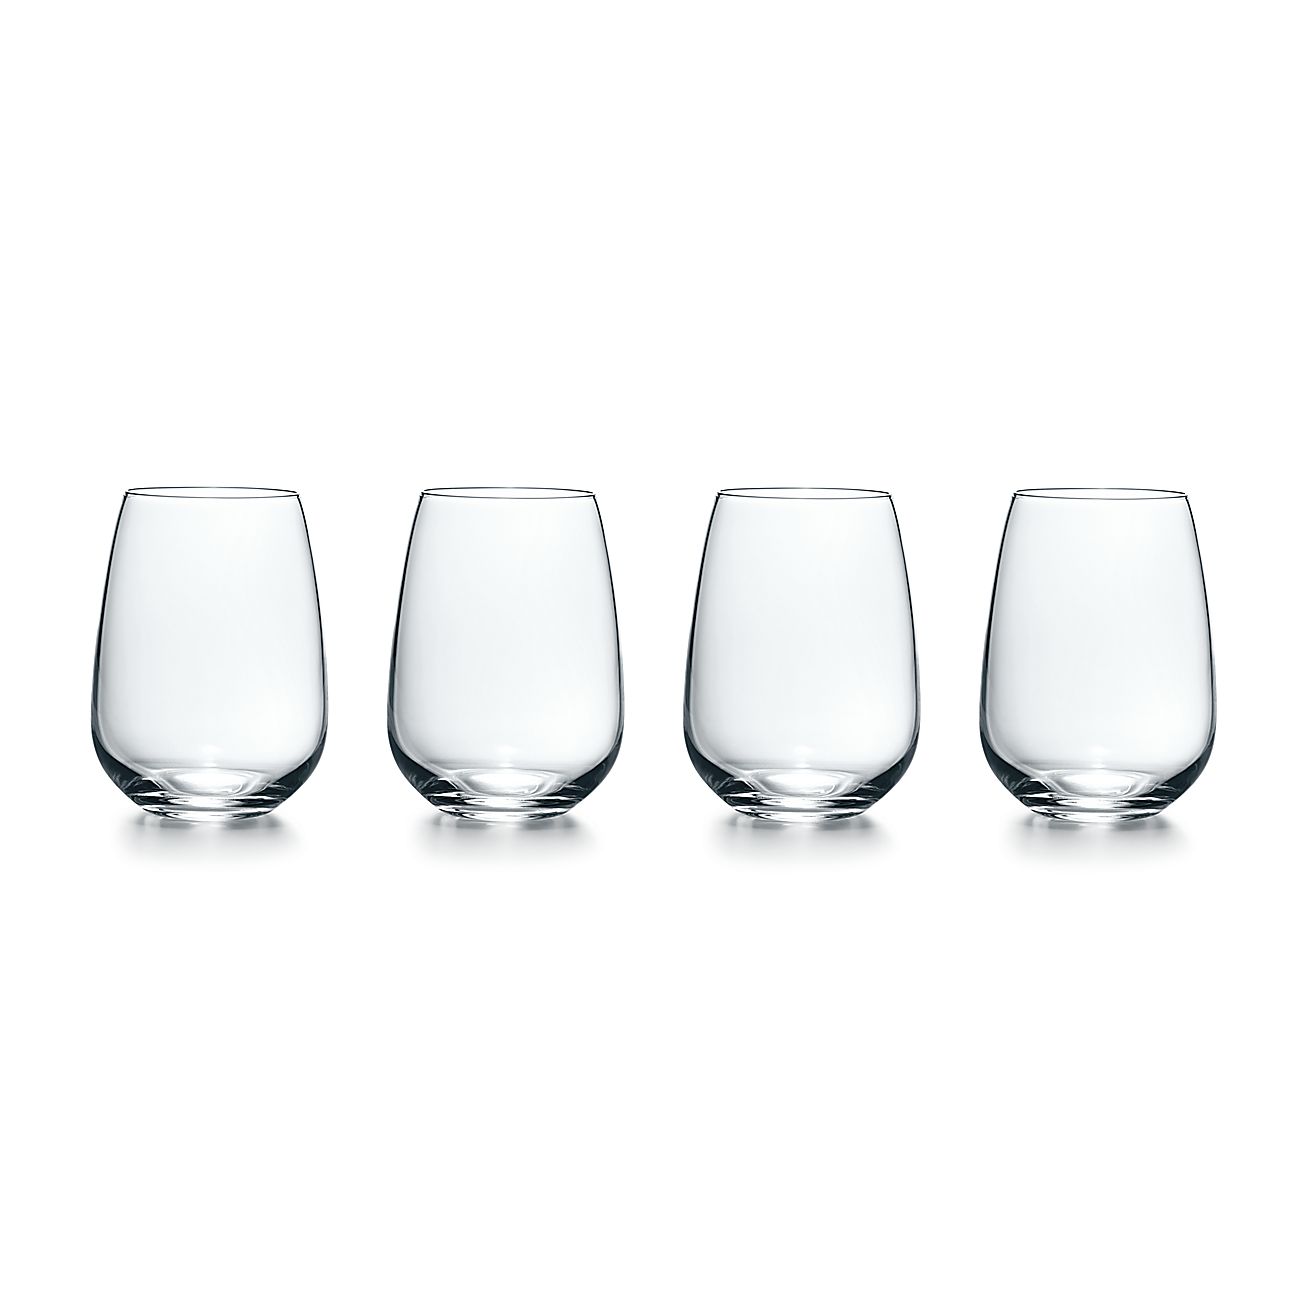 https://media.tiffany.com/is/image/Tiffany/EcomItemL2/all-purpose-white-wine-stemless-glasses-69544207_1017626_ED.jpg?&op_usm=2.0,1.0,6.0&$cropN=0.1,0.1,0.8,0.8&defaultImage=NoImageAvailableInternal&